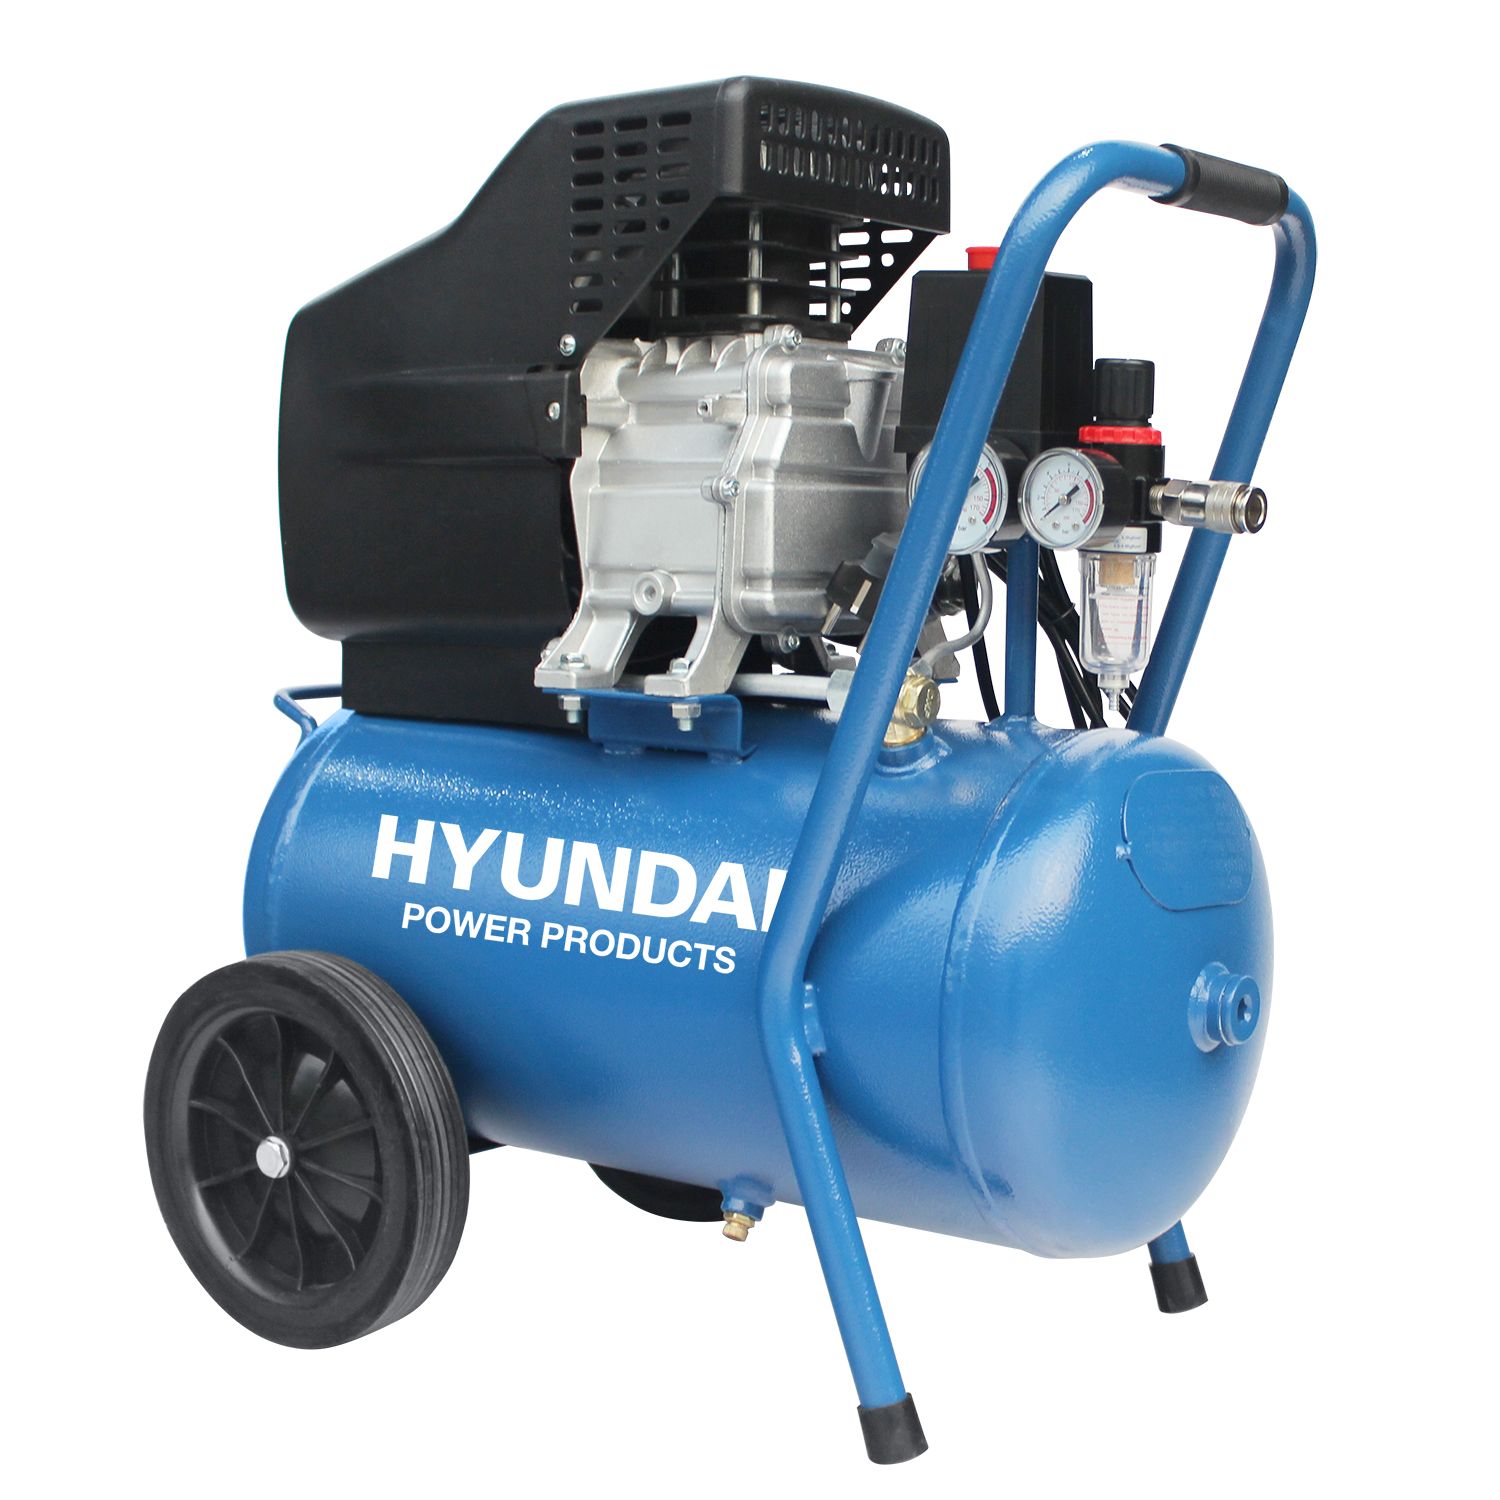 Hyundai compressor 24 L 8 bar